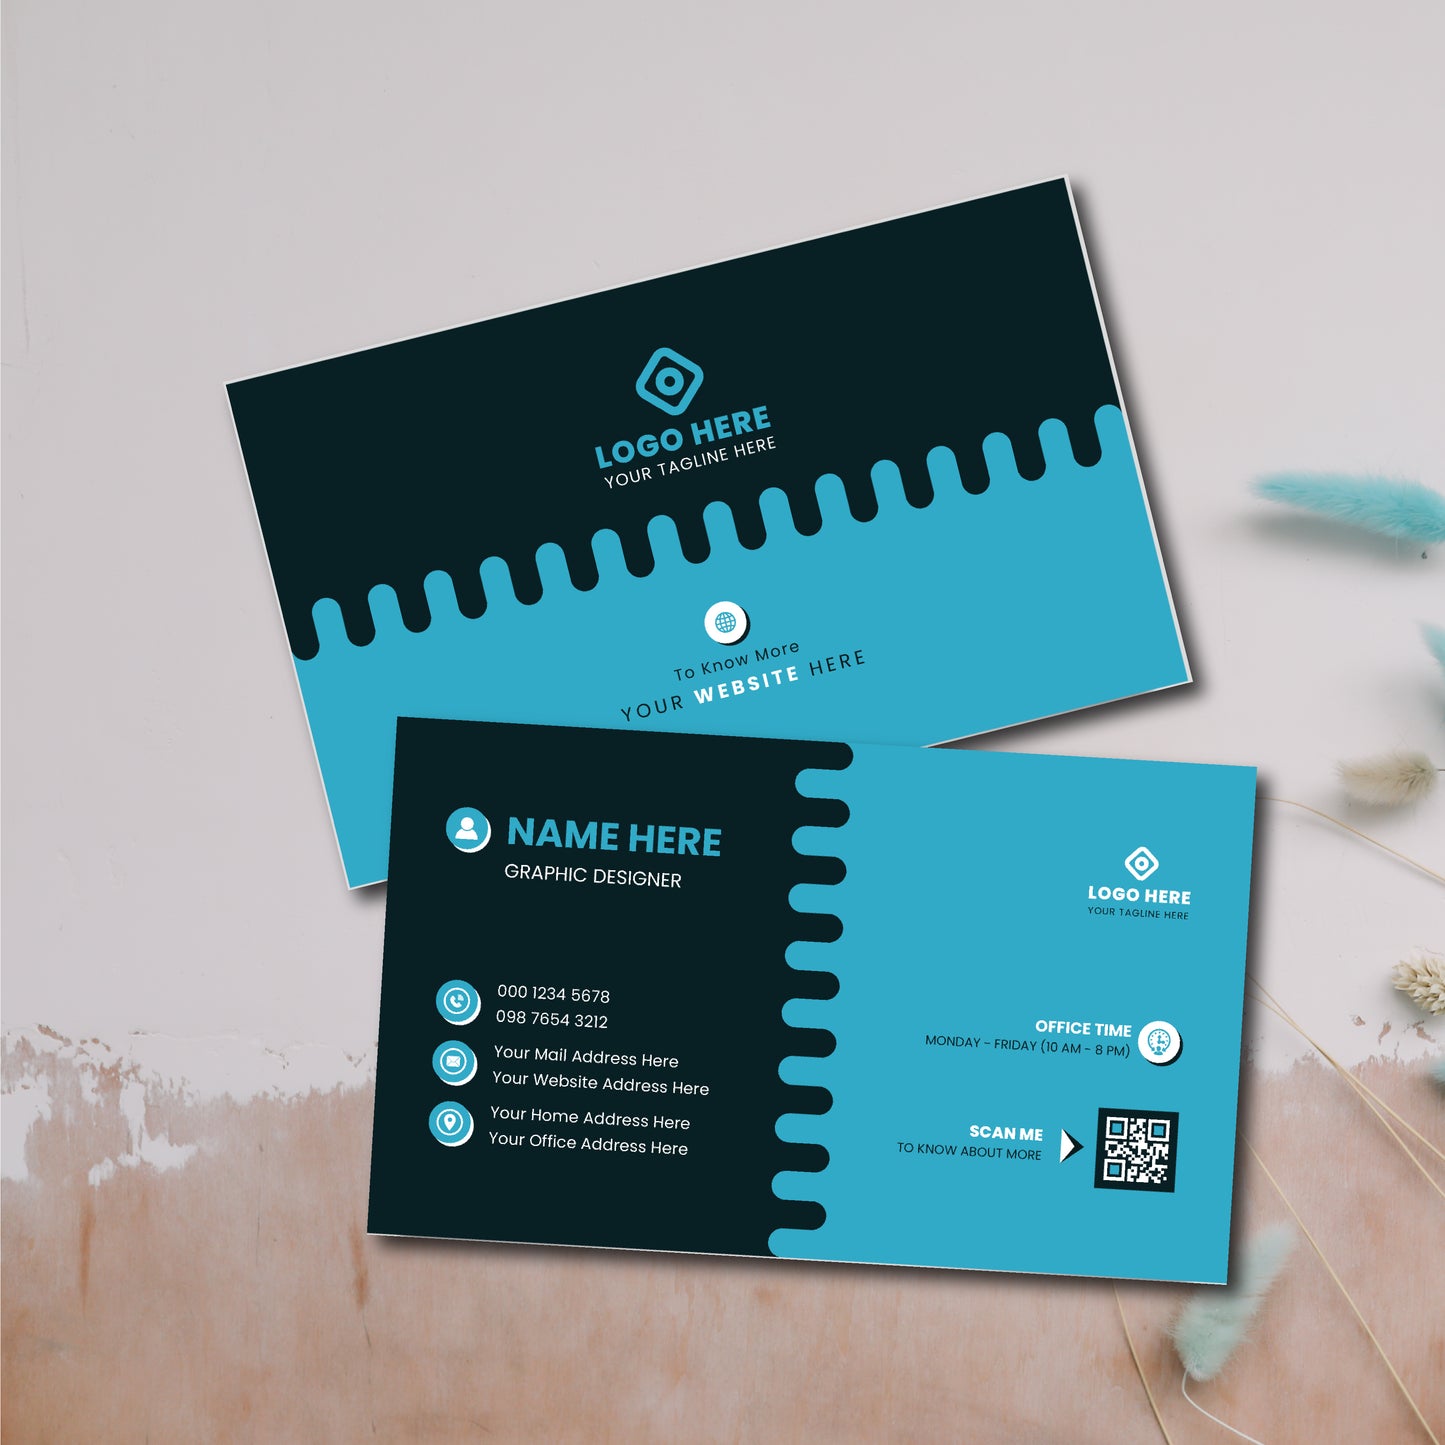 Double Sided Creative custom business cards, 500 pcs Business cards, real state business cards, personalized business cards, customized business cards